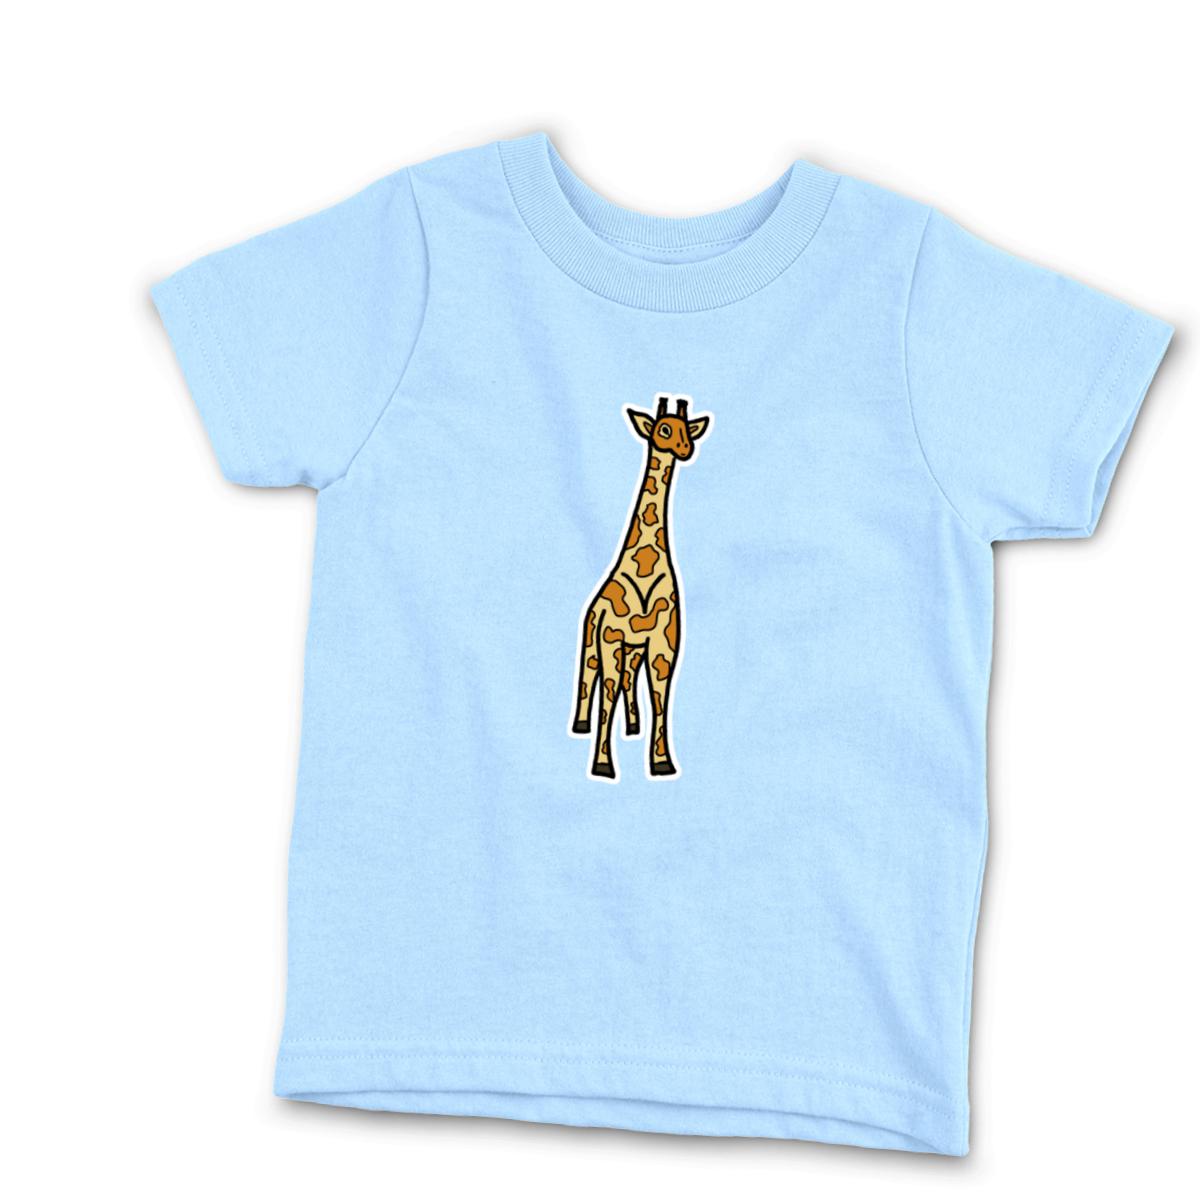 Toy Giraffe Kid's Tee Small light-blue